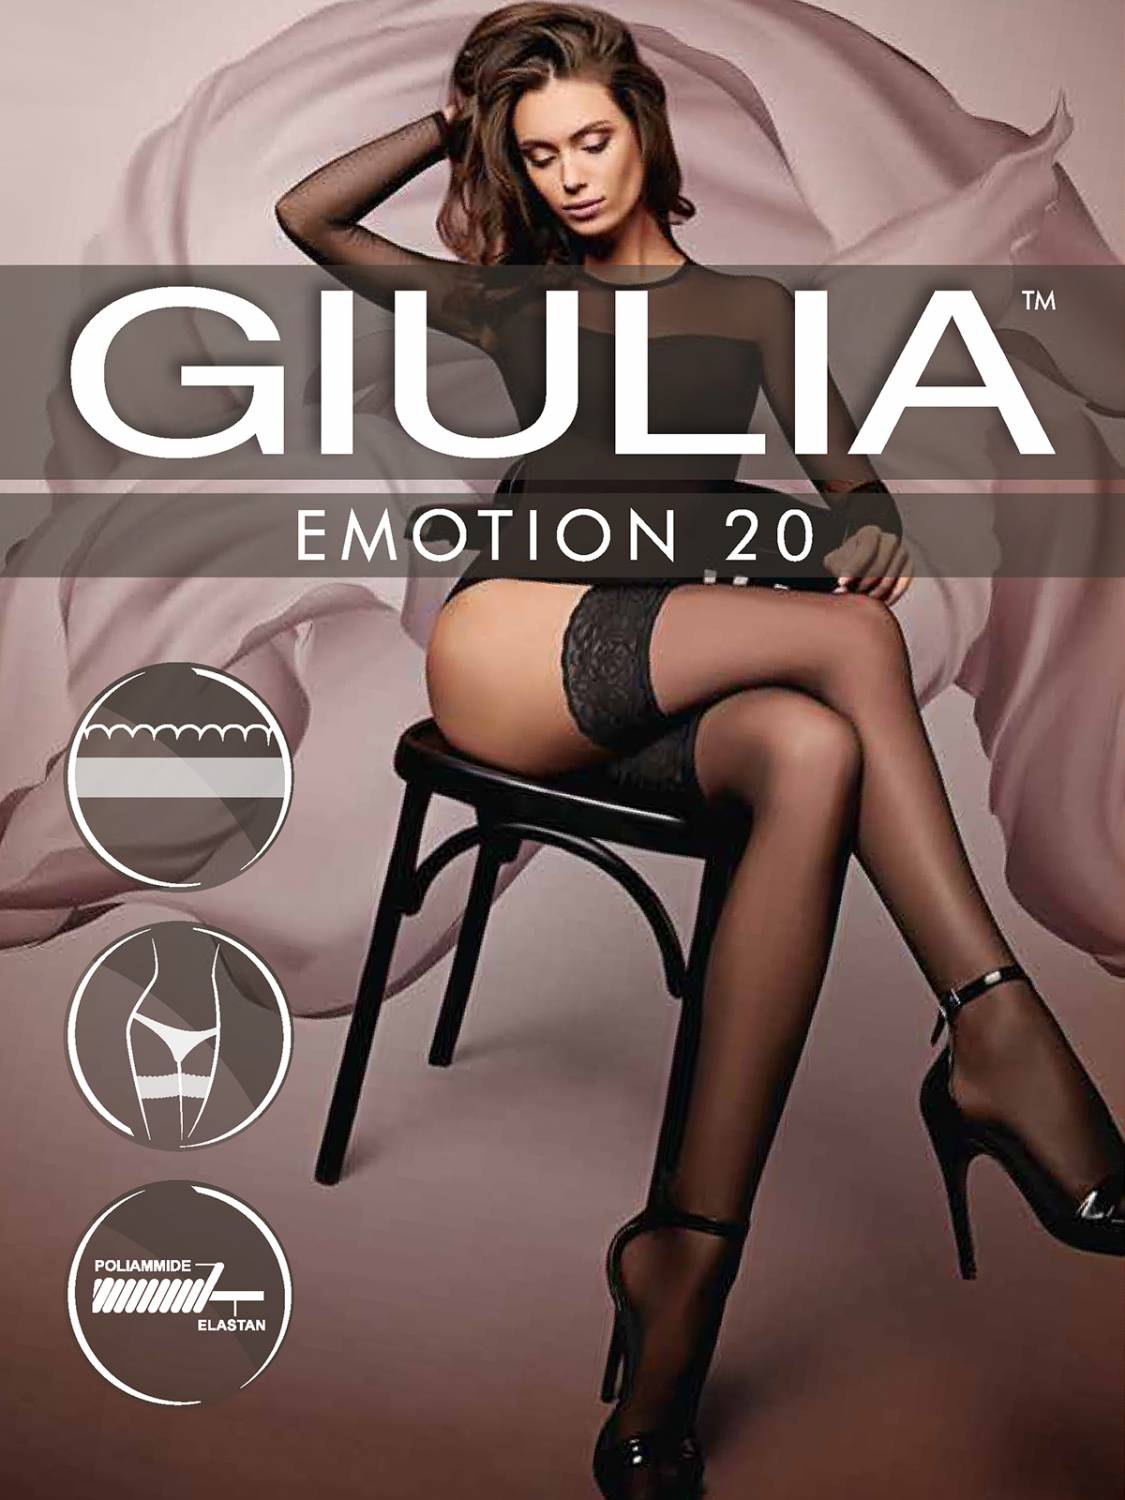 Чулки Giulia EMOTION 20 чулки купить в интернет-магазине Noskivkorobke.ru  по цене 545 руб.